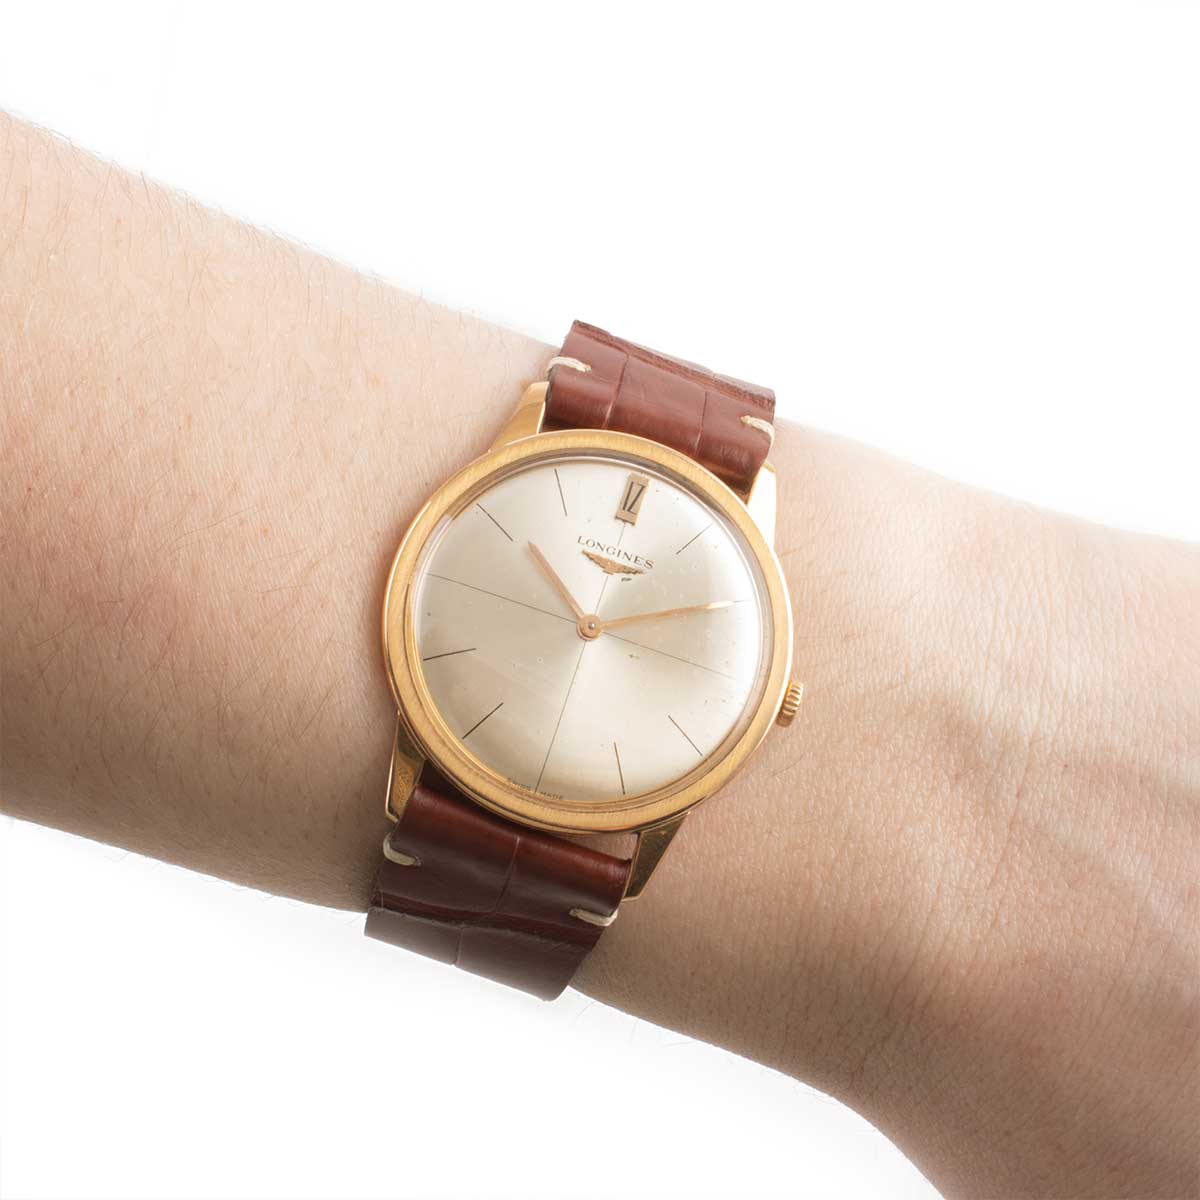 ​Second-hand watch - Longines - 1600€